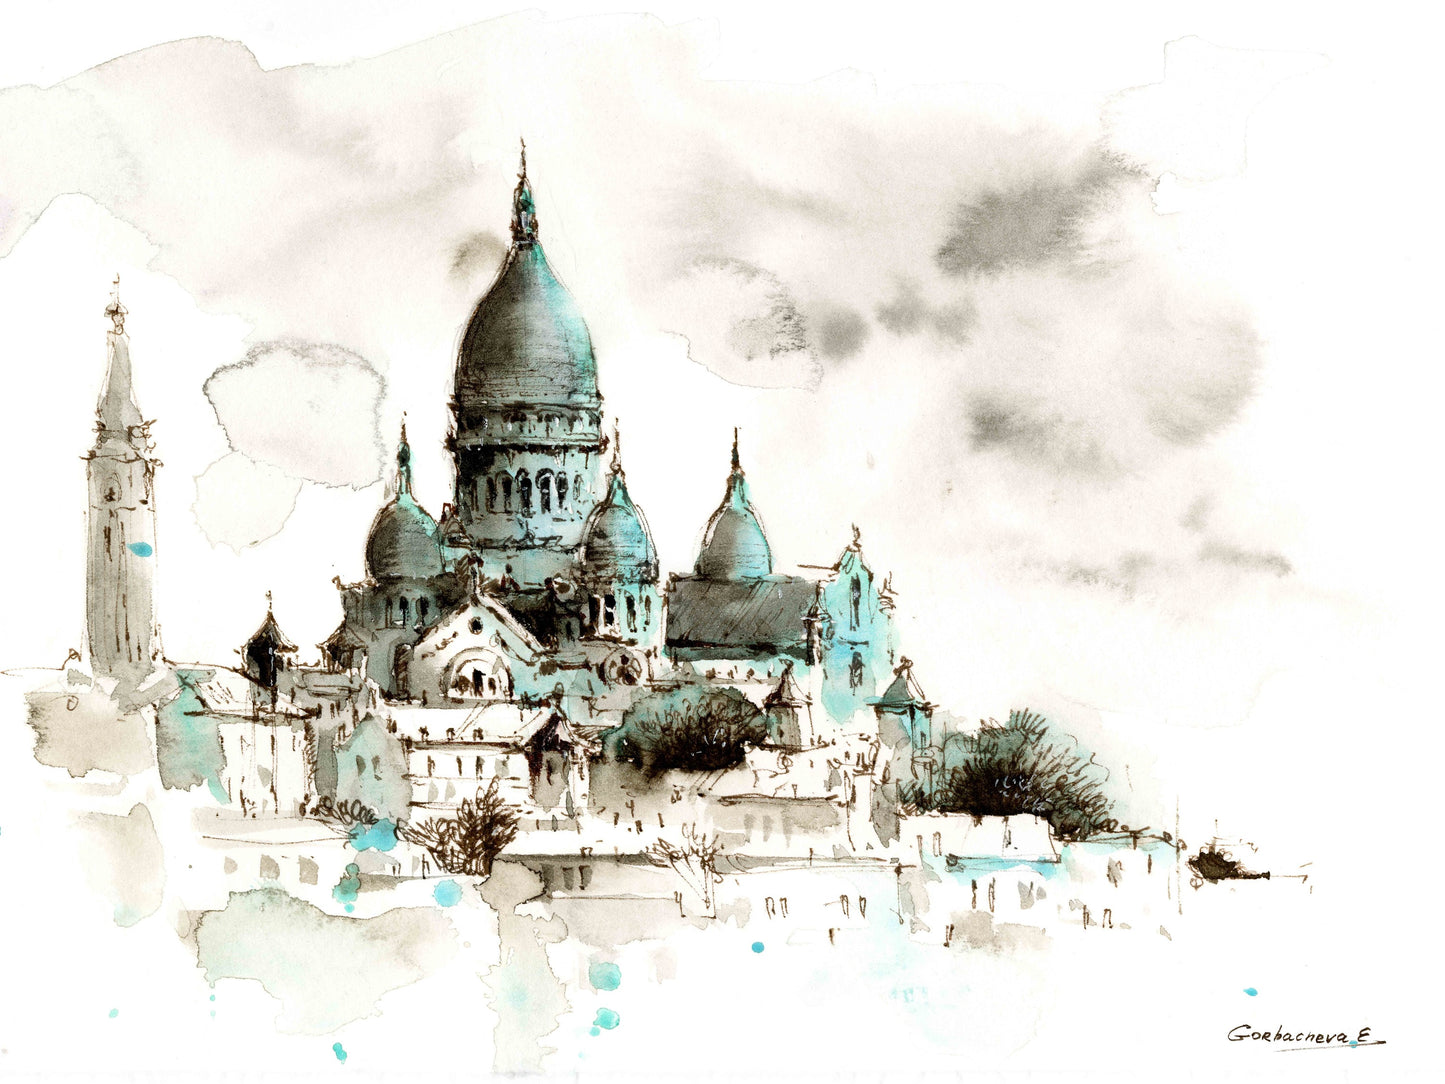 Travel Painting Sketch, Art Prints Set of 2, European City, Paris, Prague, Europa, Architecture Wall Art Decor